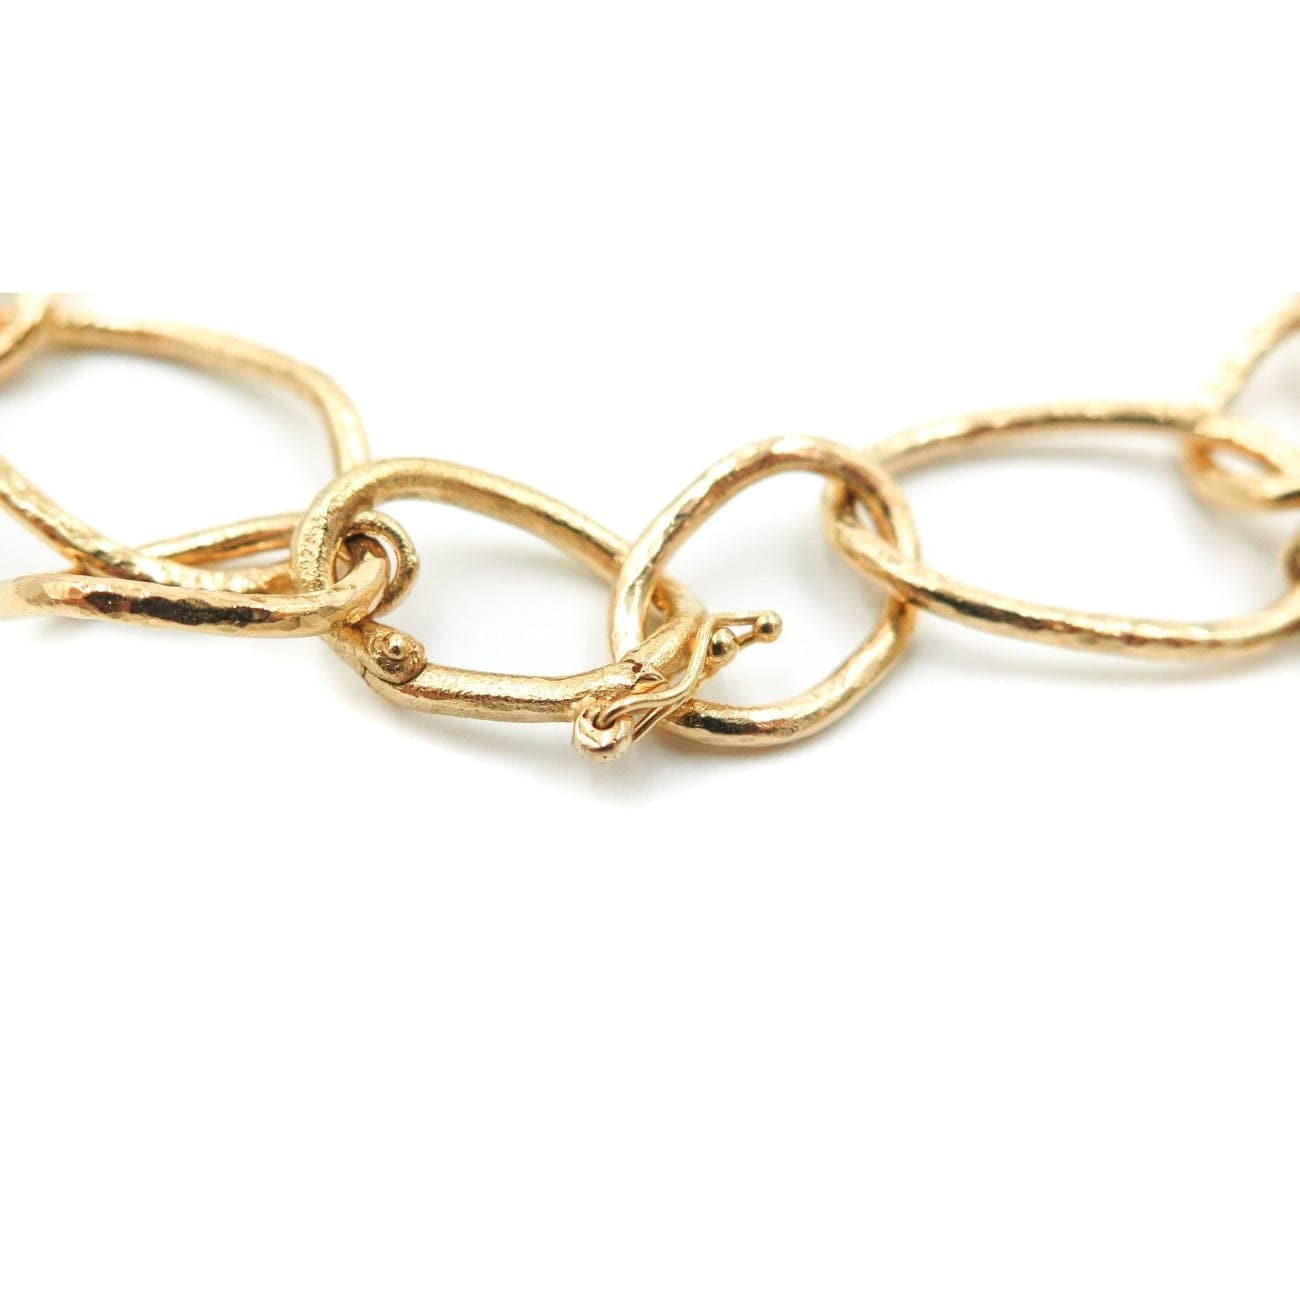 Estate Jewelry Paola Ferro Infinity Yellow Gold Charm by Paola Ferro - Estate Jewelry